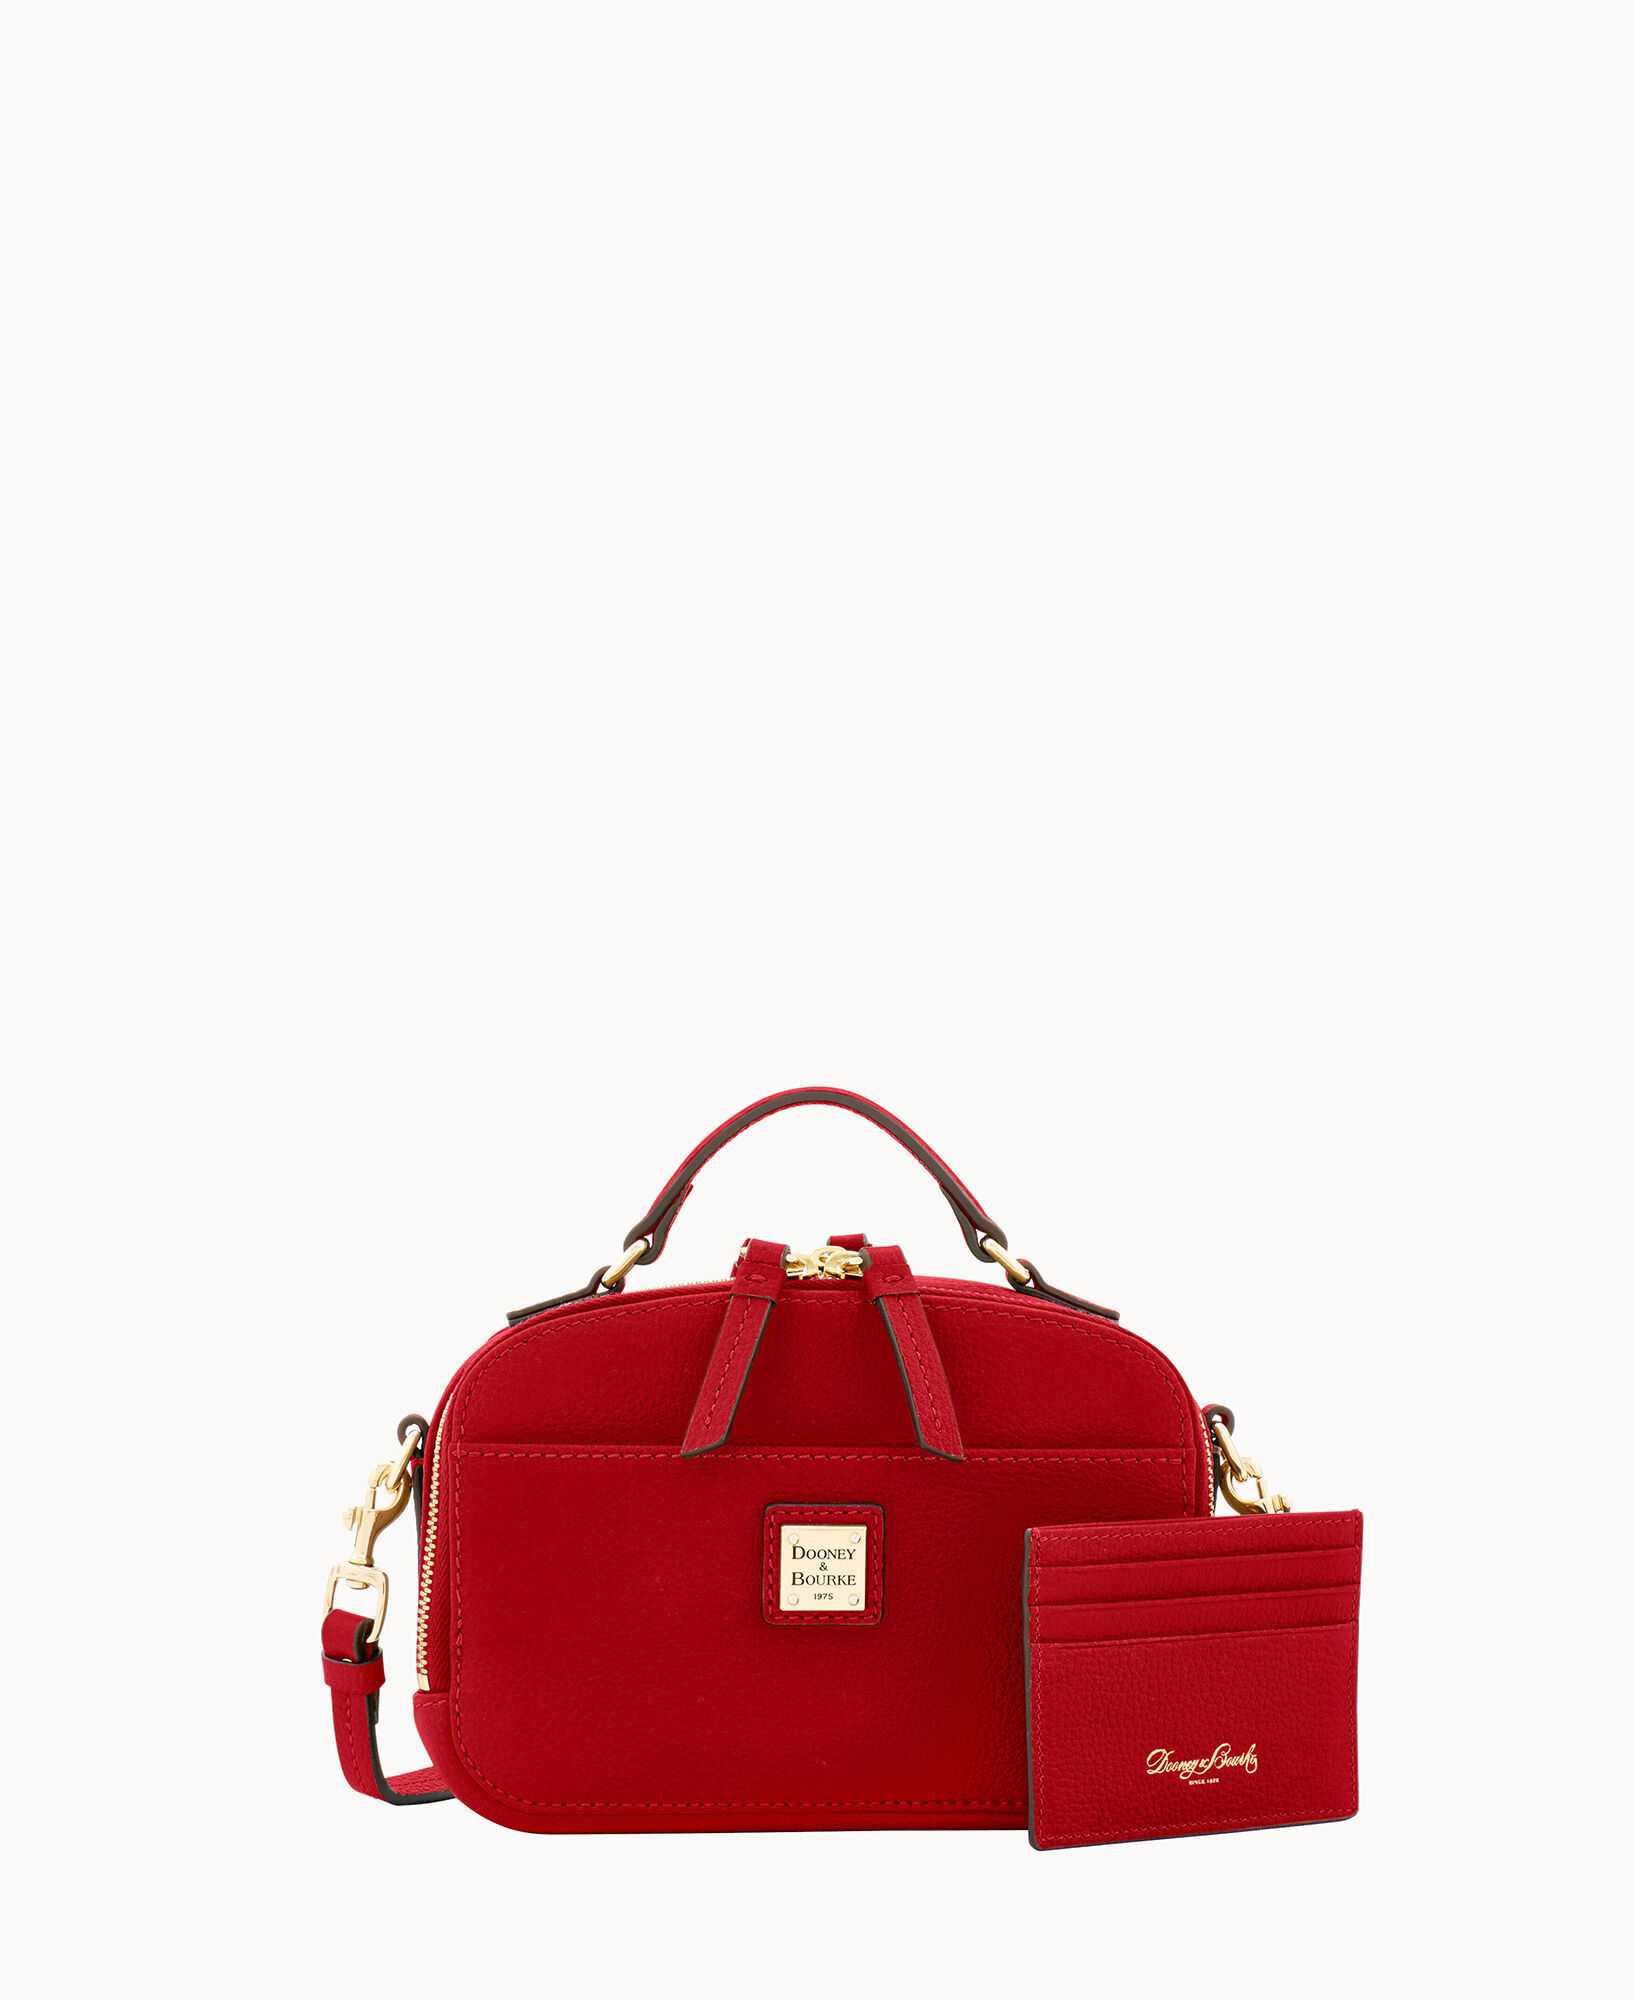 Dooney & And Bourke Red Tartan Plaid Large Shoulder Tote Bag Handbag Purse  - Đức An Phát